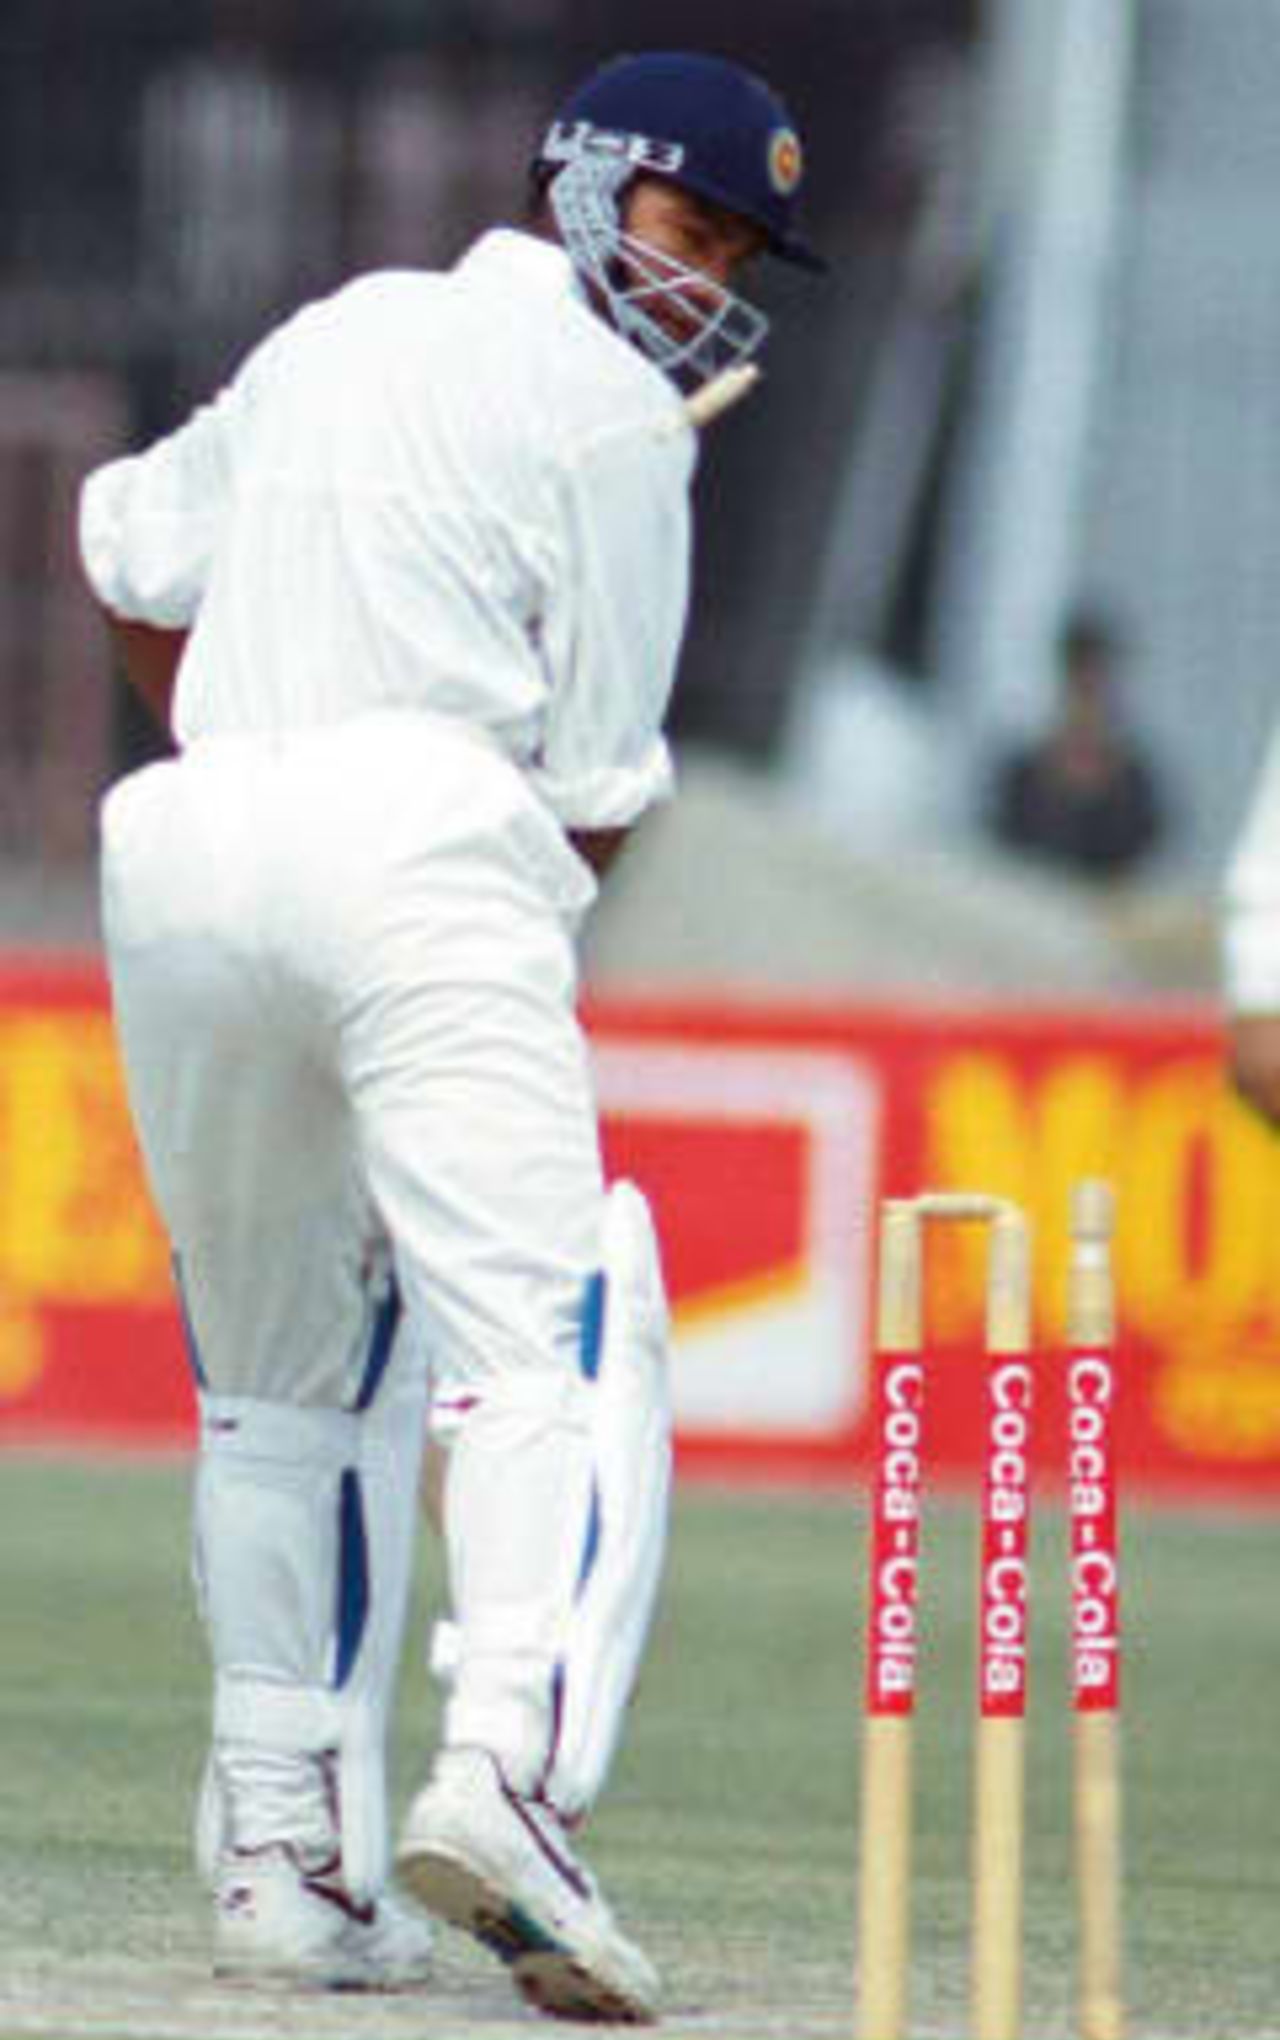 Hat trick! Wickramasinghe bowled by Wasim Akram  - Asian Test Championship, 1998/99, 3rd Match, Pakistan v Sri Lanka, Gadaffi Stadium, Lahore, 6 March 1999